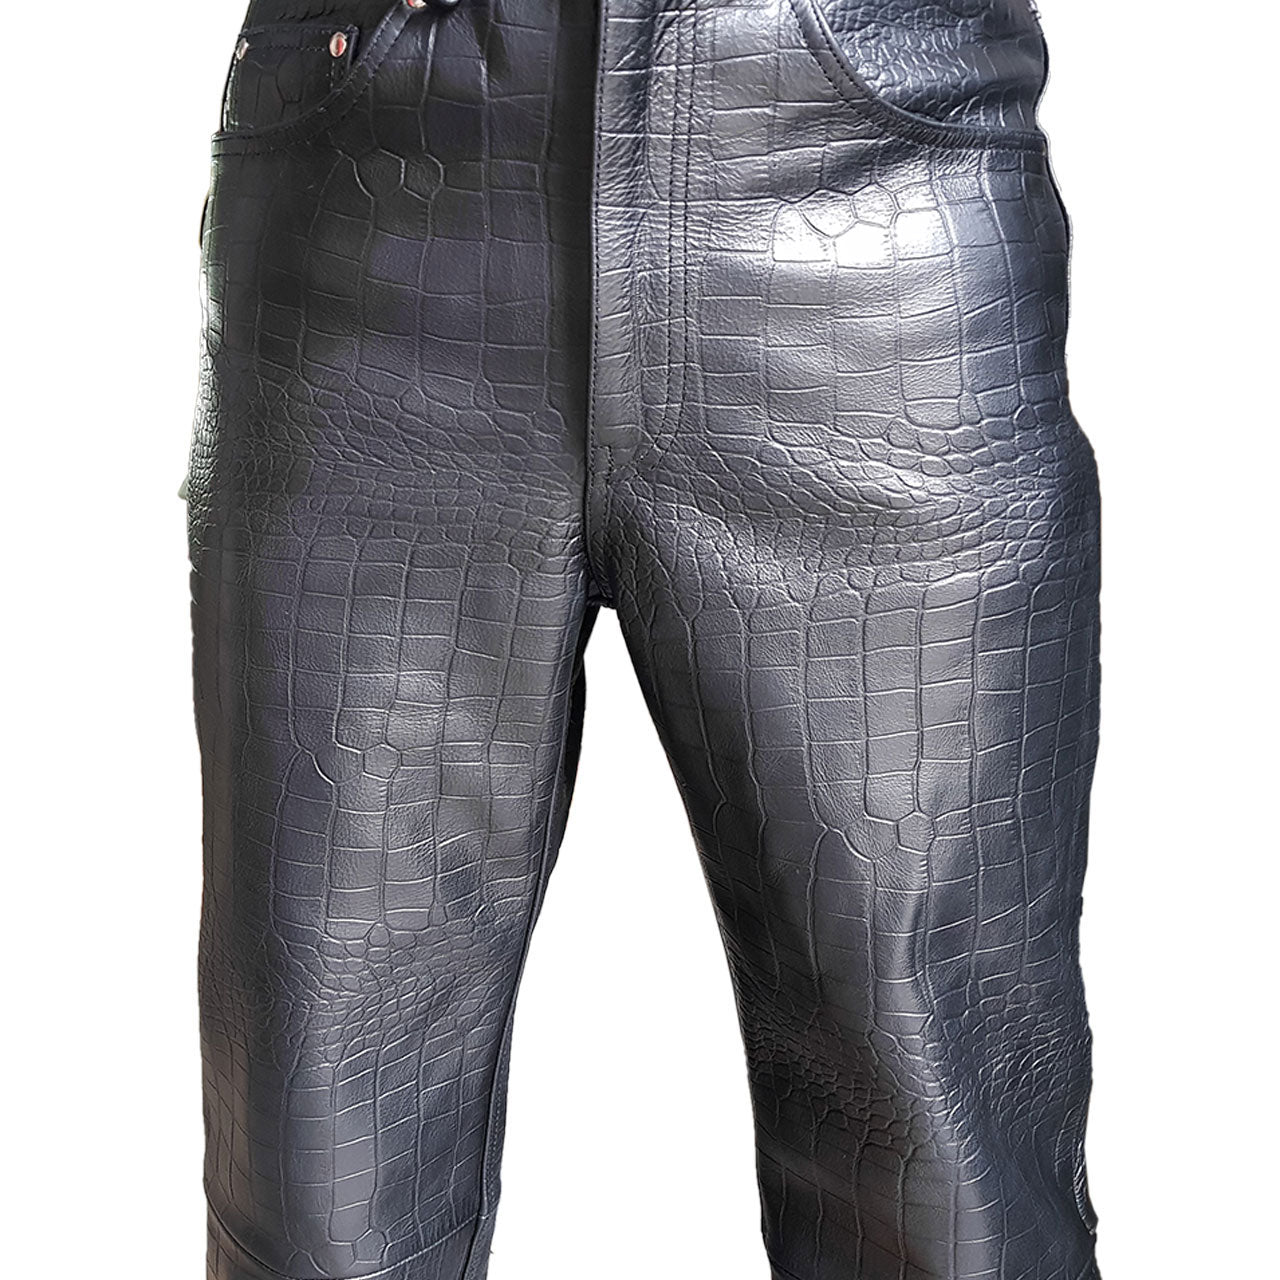 Mens Black Leather Crocodile Print 501 Style Jeans Pants Trouser Bikers Club